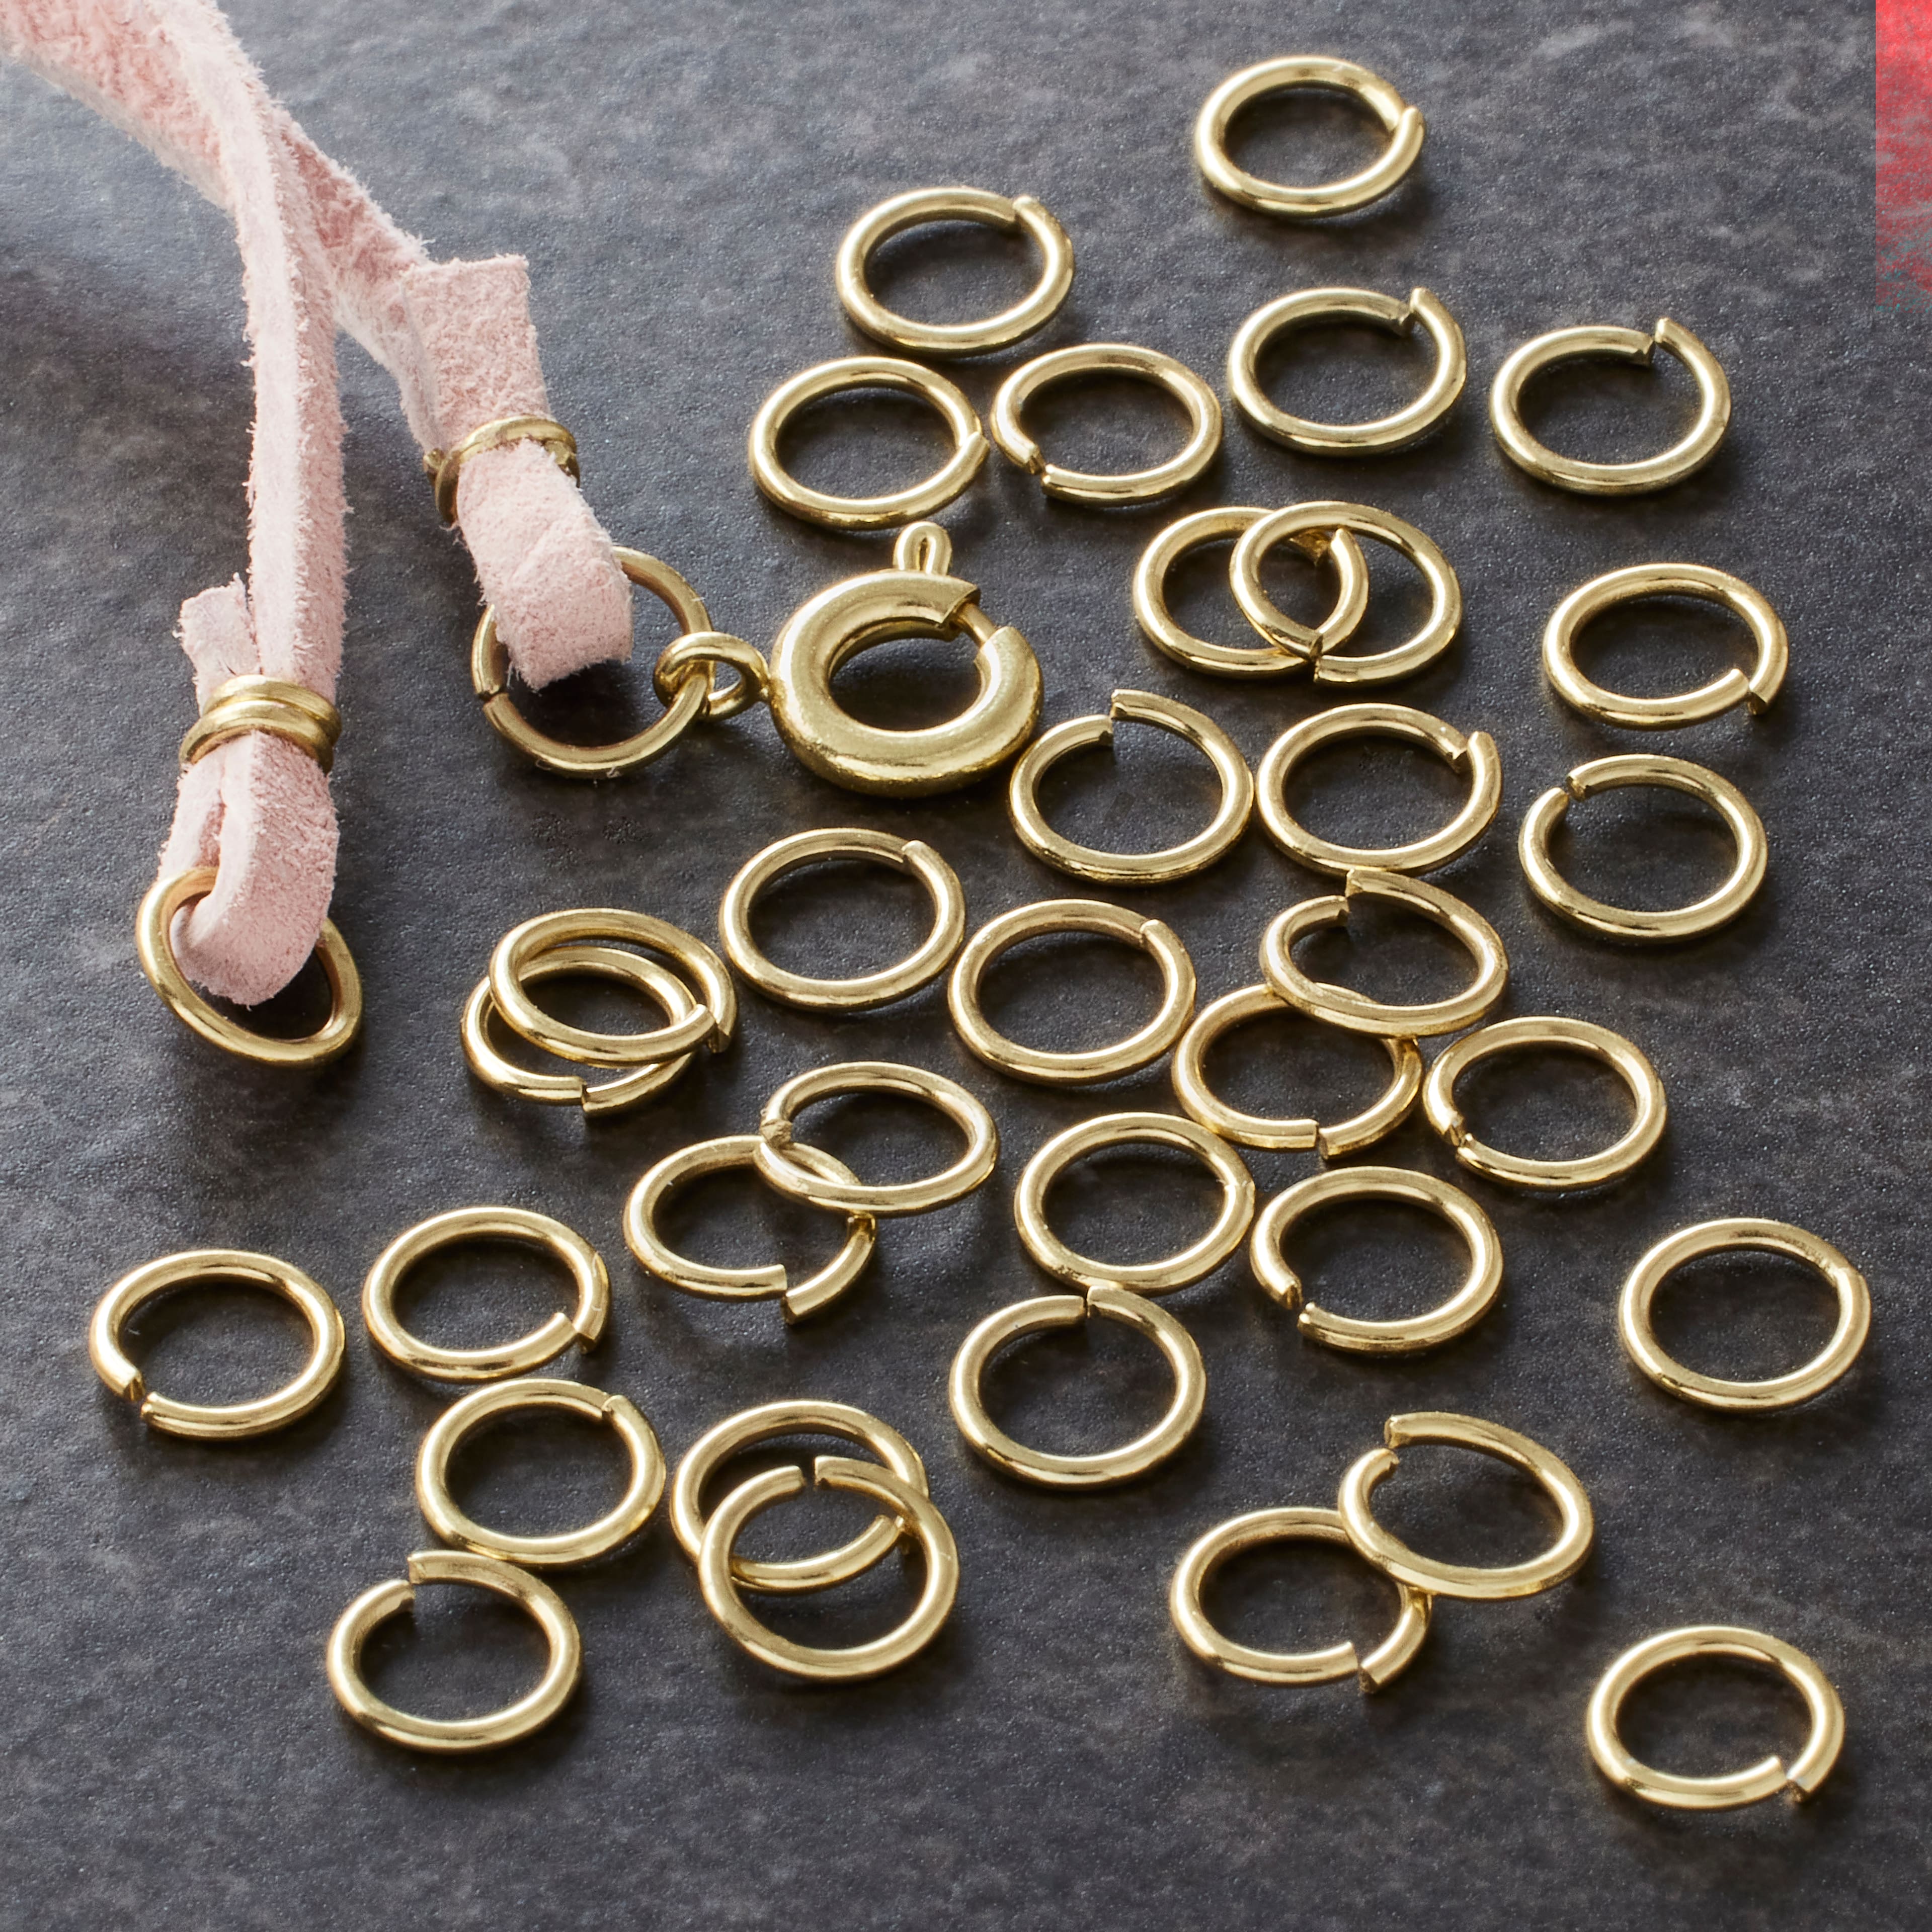 Caravan Beads - - 190-247: Soldered Gold-Filled Jump Rings #190-247*